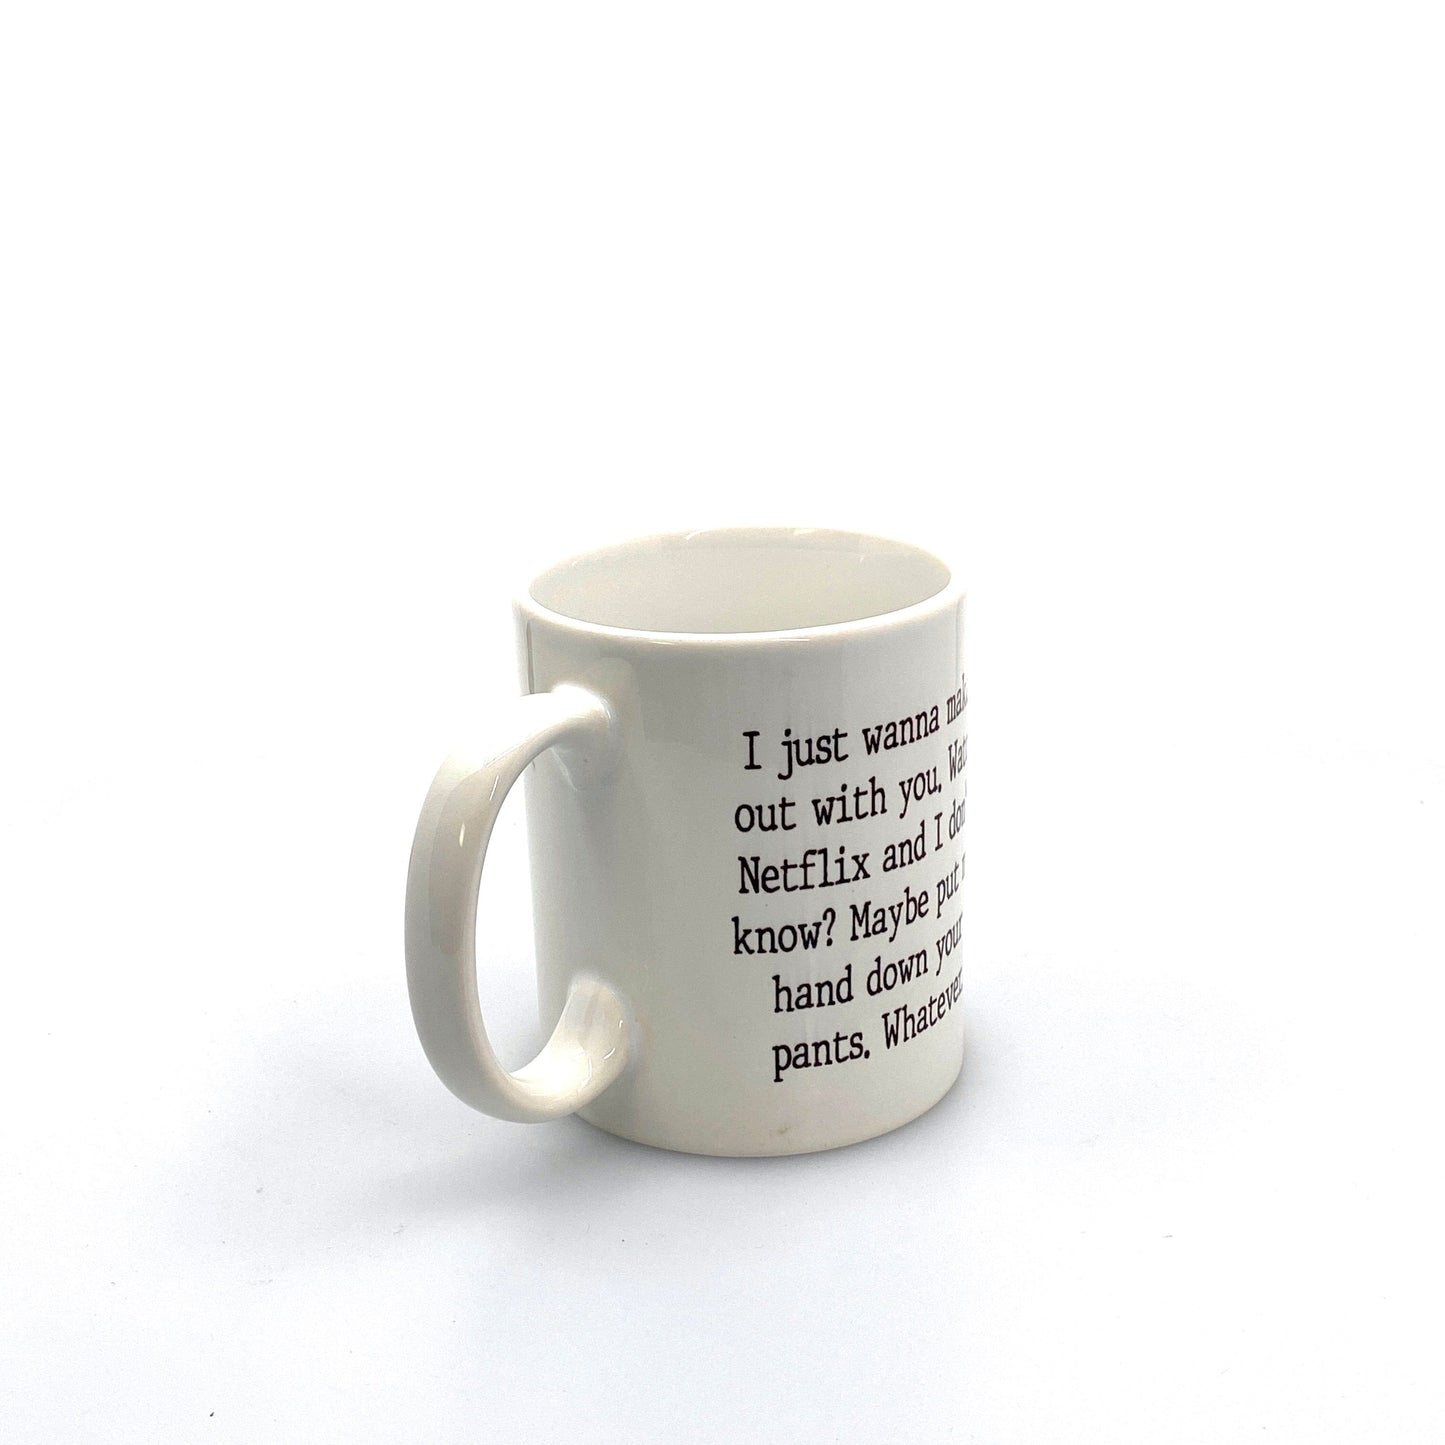 Novelty “Netflix & Chill” Adult Humor White Ceramic Coffee Mug